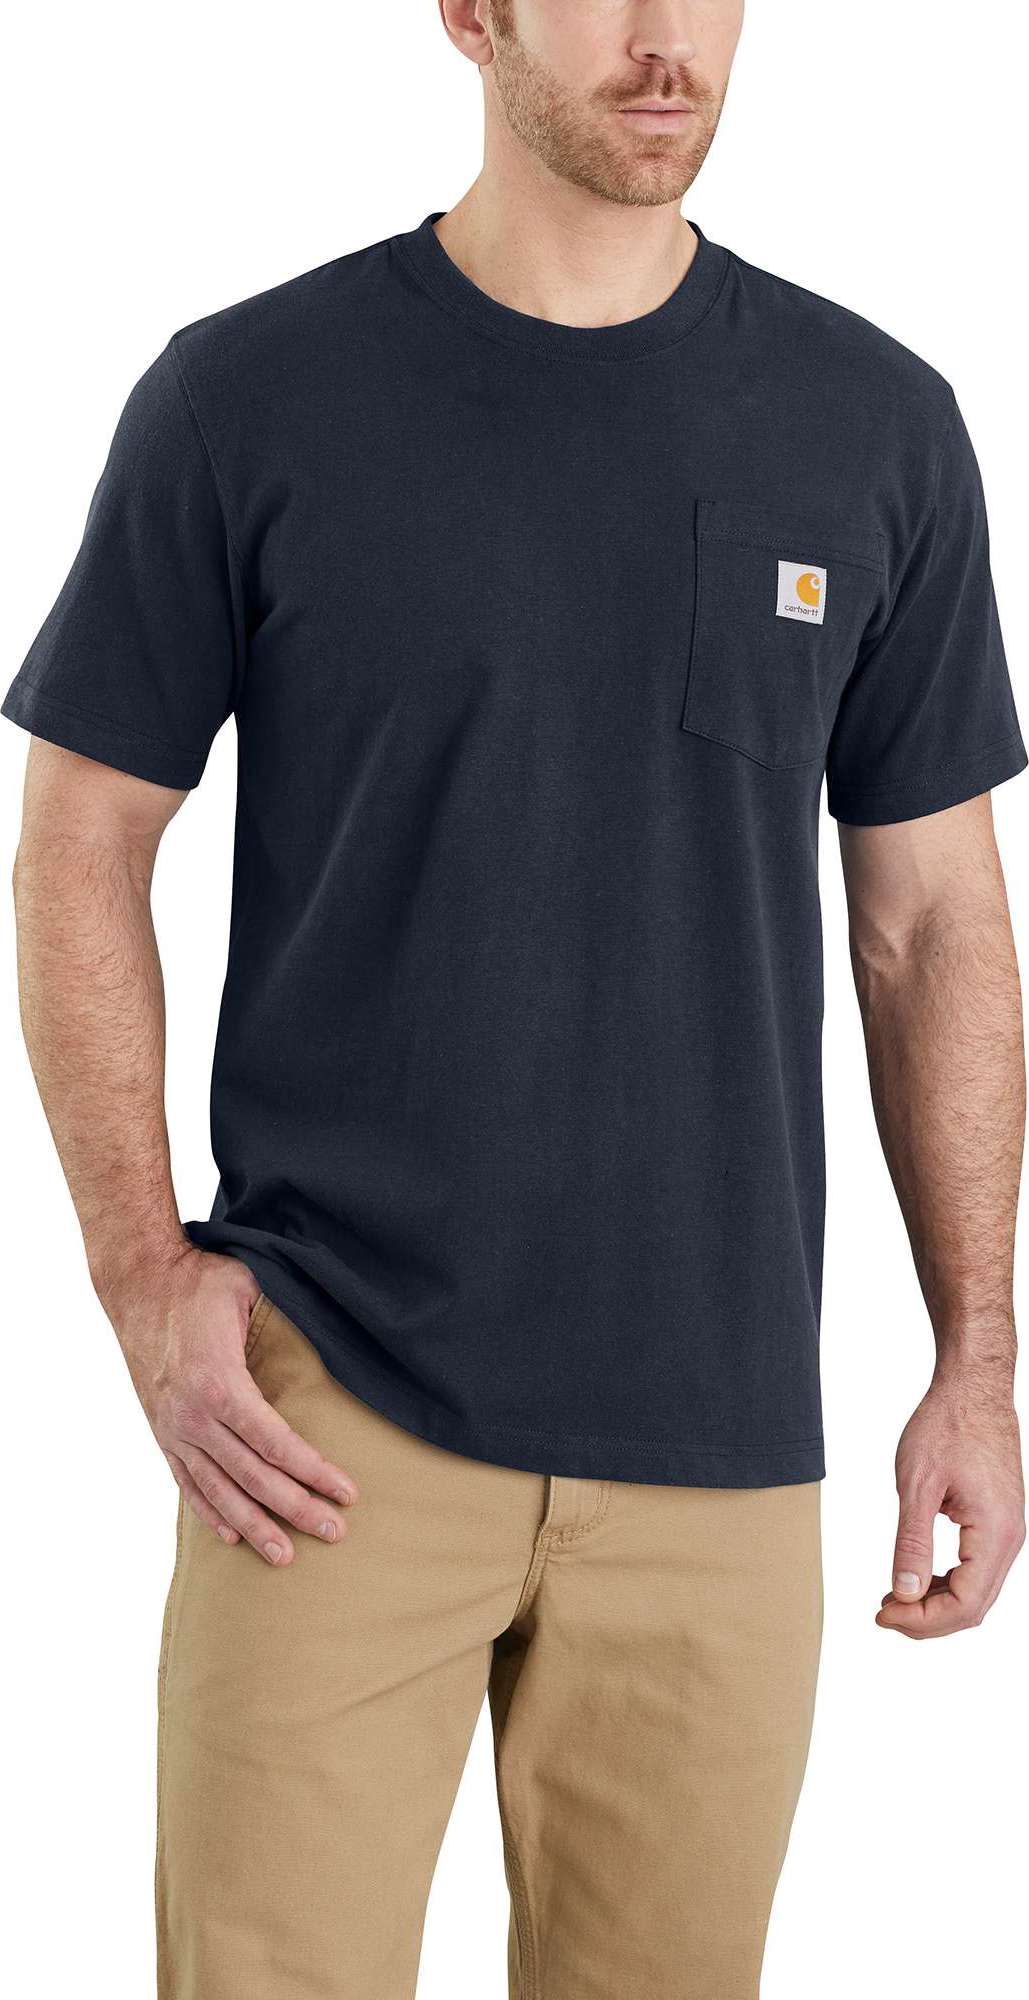 Carhartt Men's Workwear Pocket S/S T-Shirt Navy